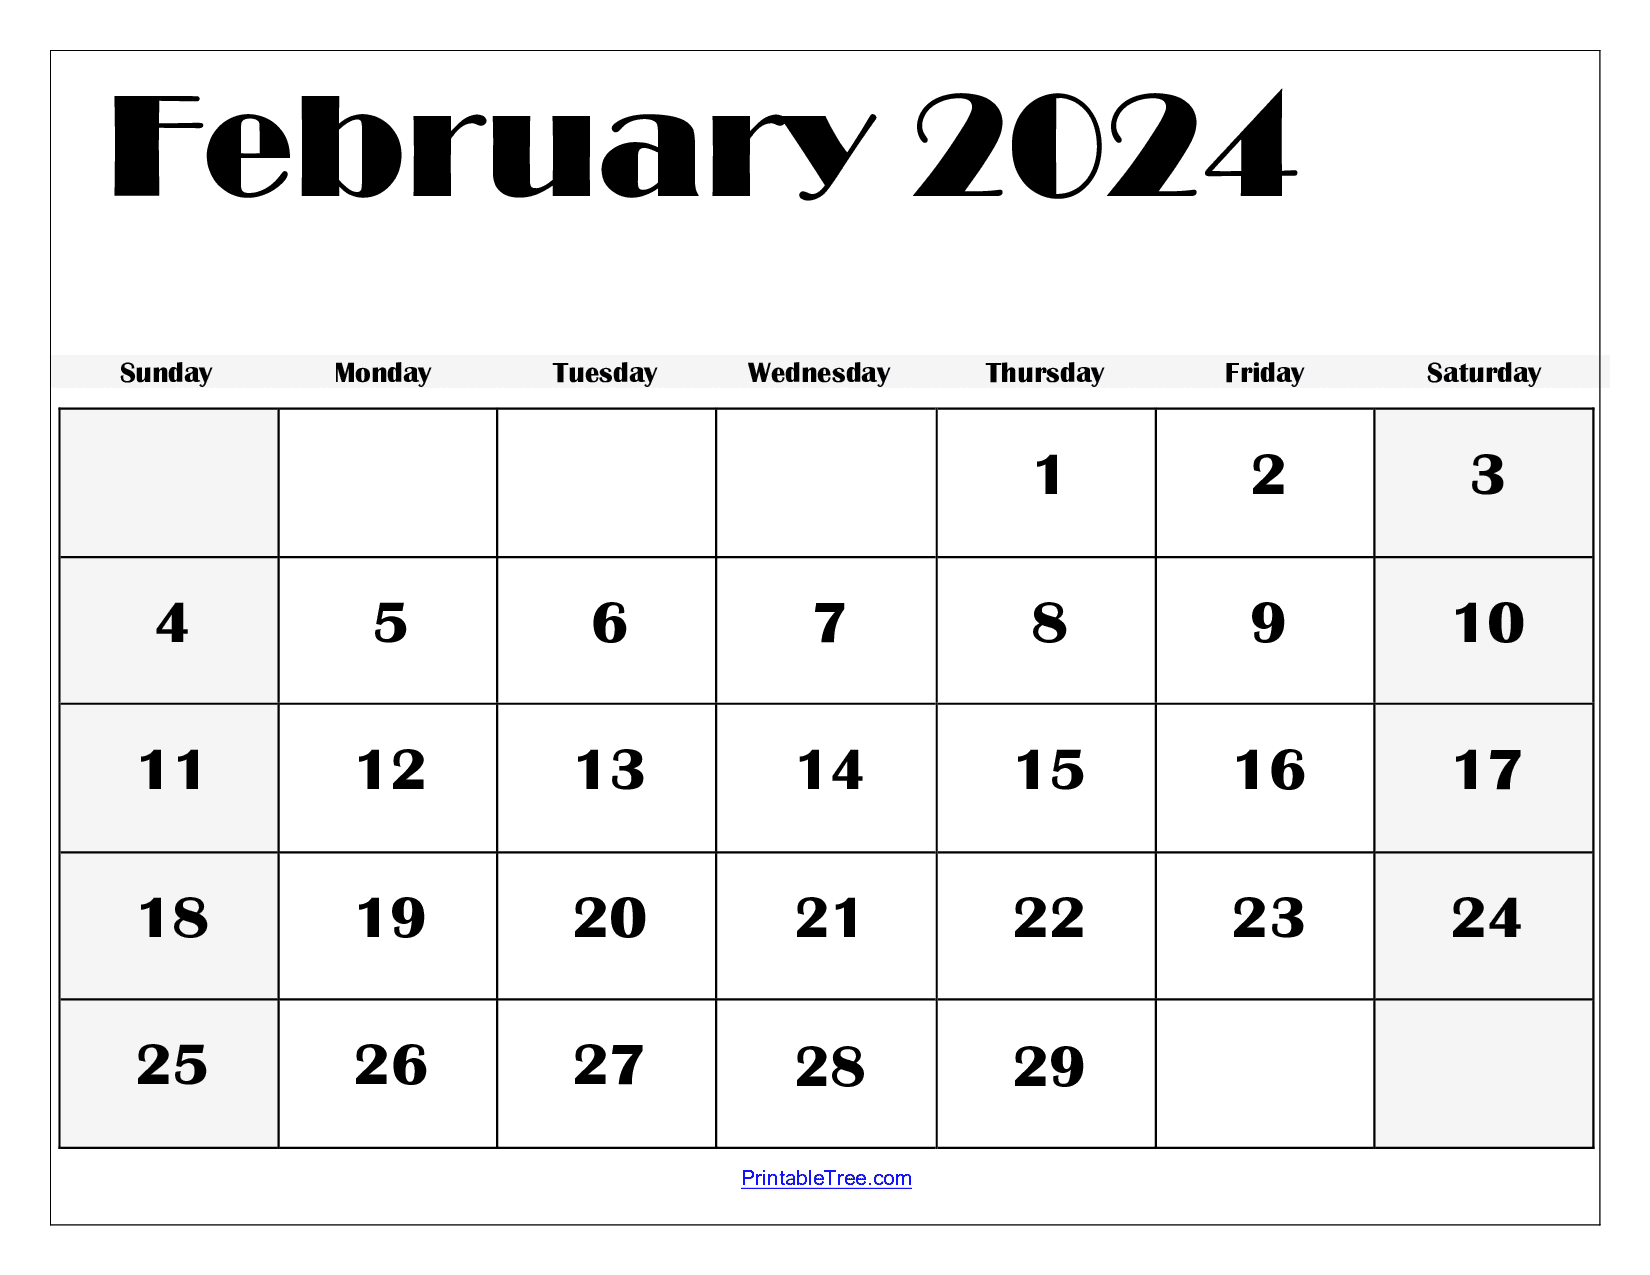 February 2024 Calendar Printable Pdf Template With Holidays for February Calendar 2024 With Holidays Printable